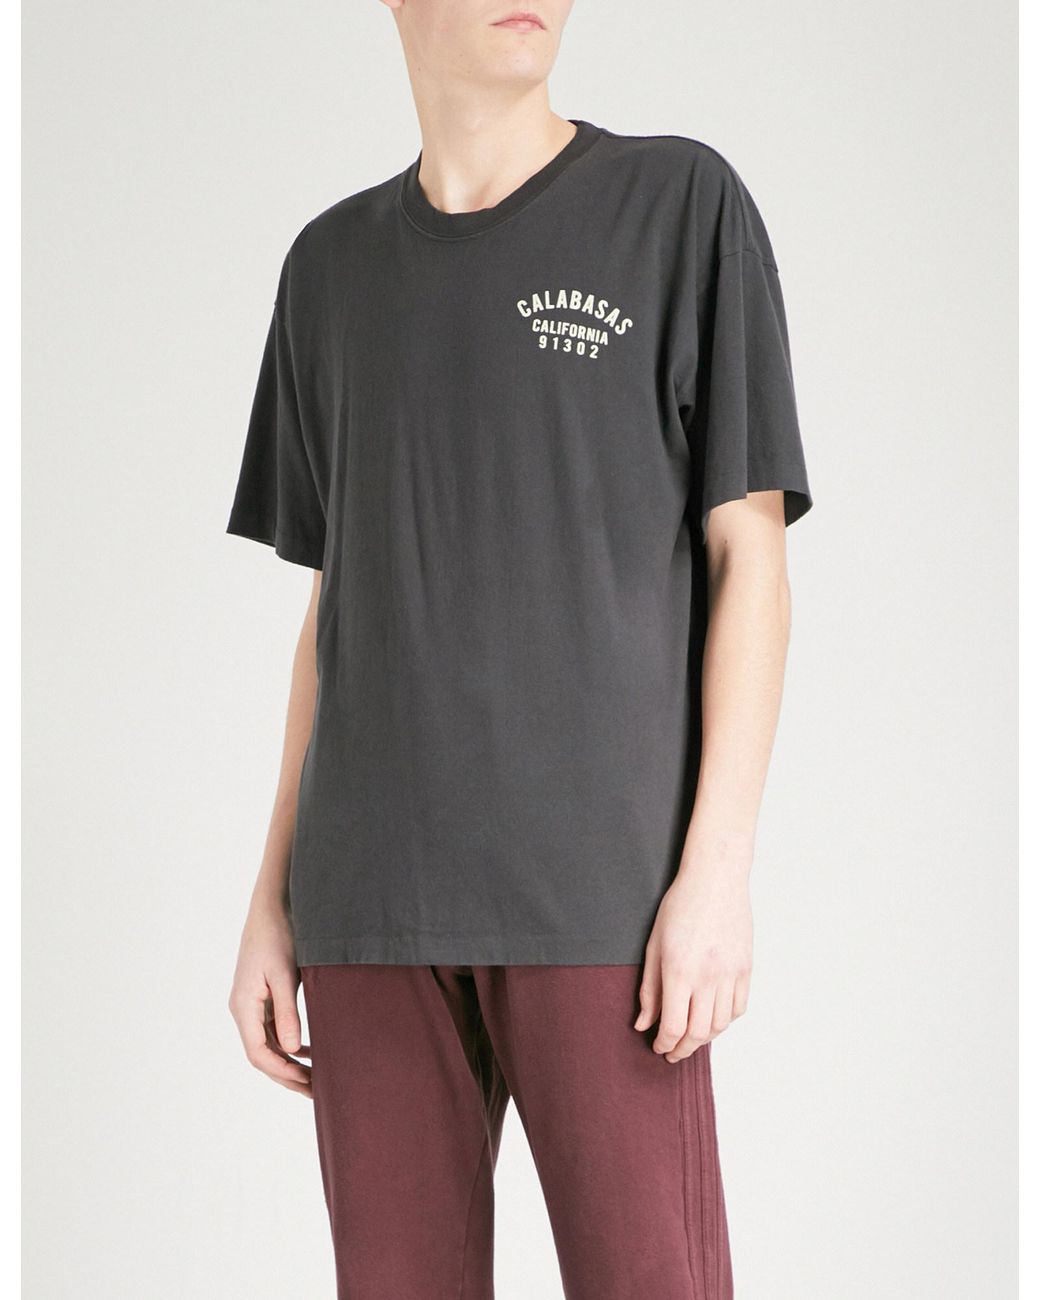 Yeezy Season 5 Calabasas Cotton-jersey T-shirt for Men | Lyst